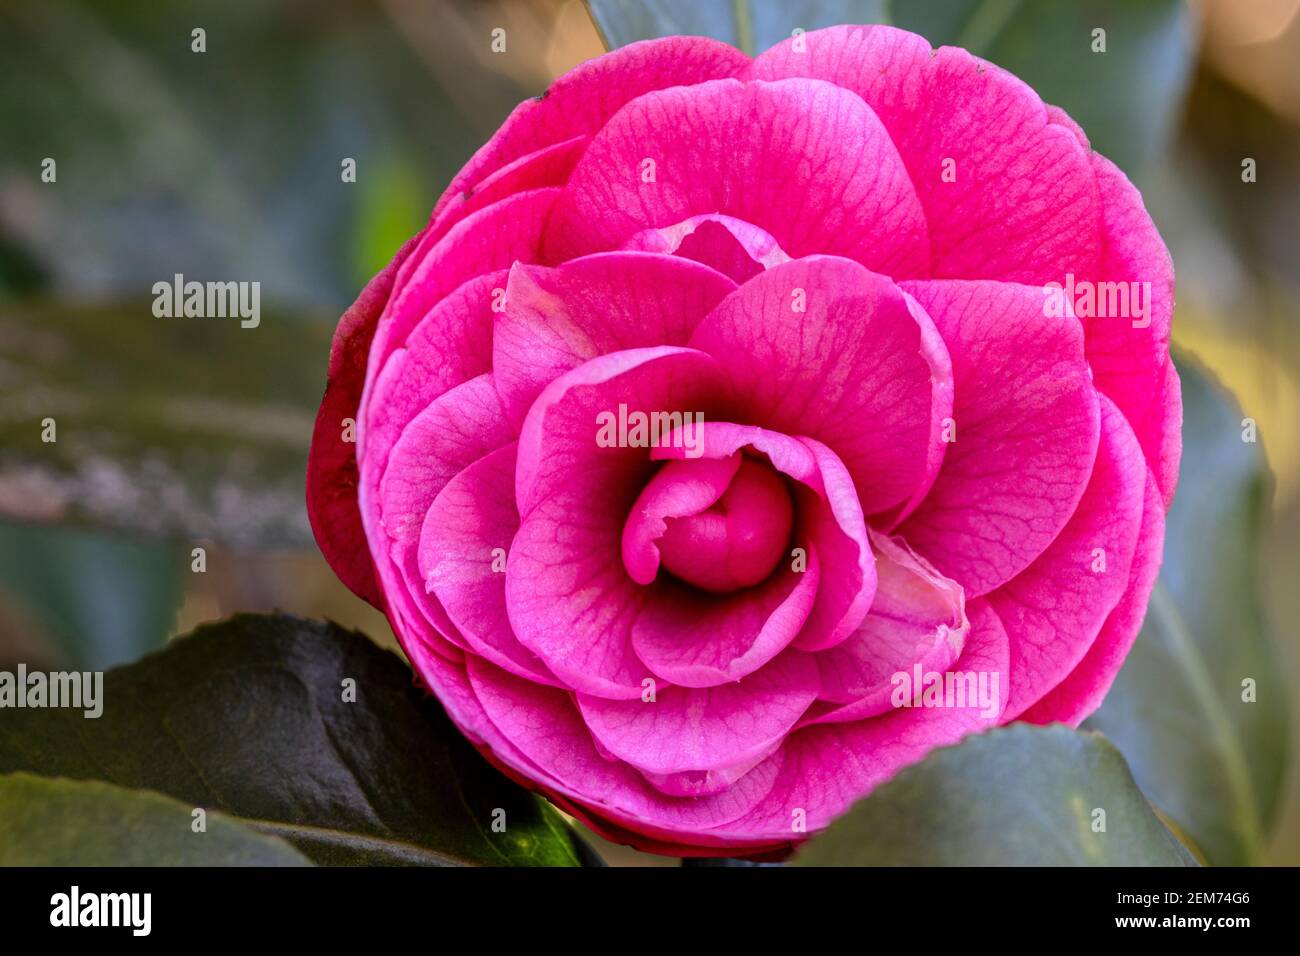 Japanese camellia (Camellia japonica) or tsubaki - South Carolina Botanical Garden, Clemson, South Carolina, USA Stock Photo